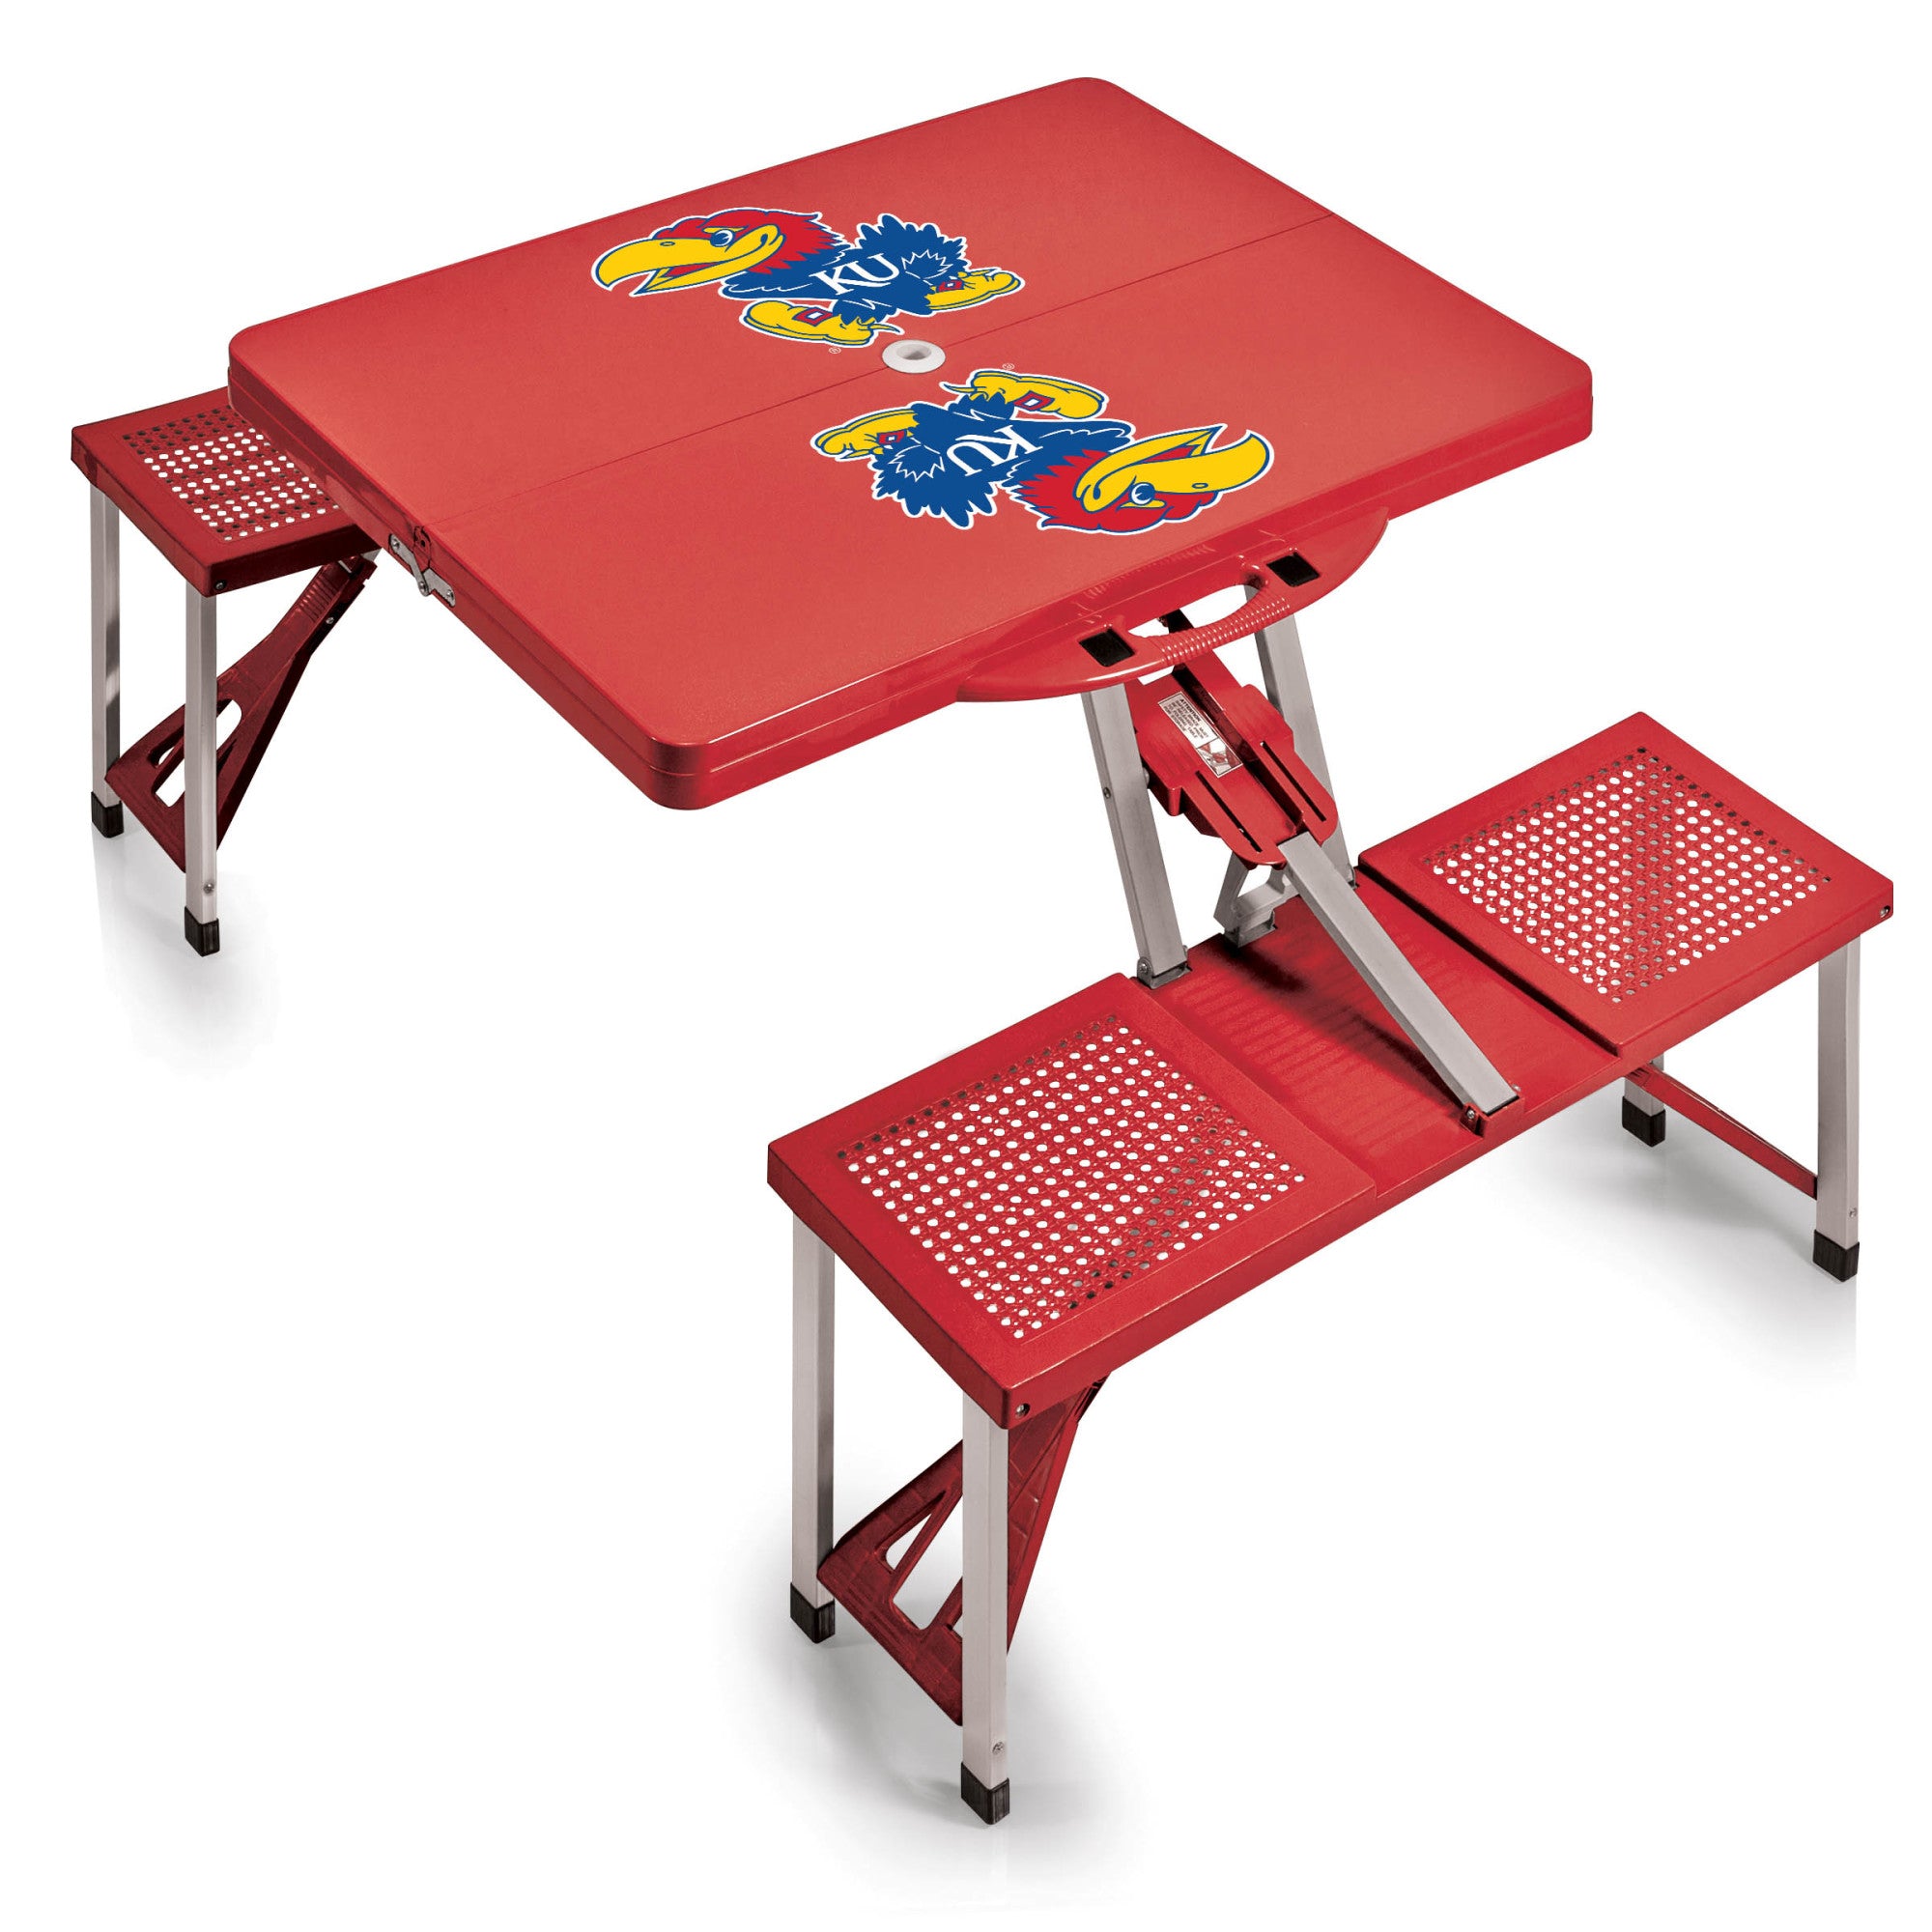 Kansas Jayhawks - Picnic Table Portable Folding Table with Seats